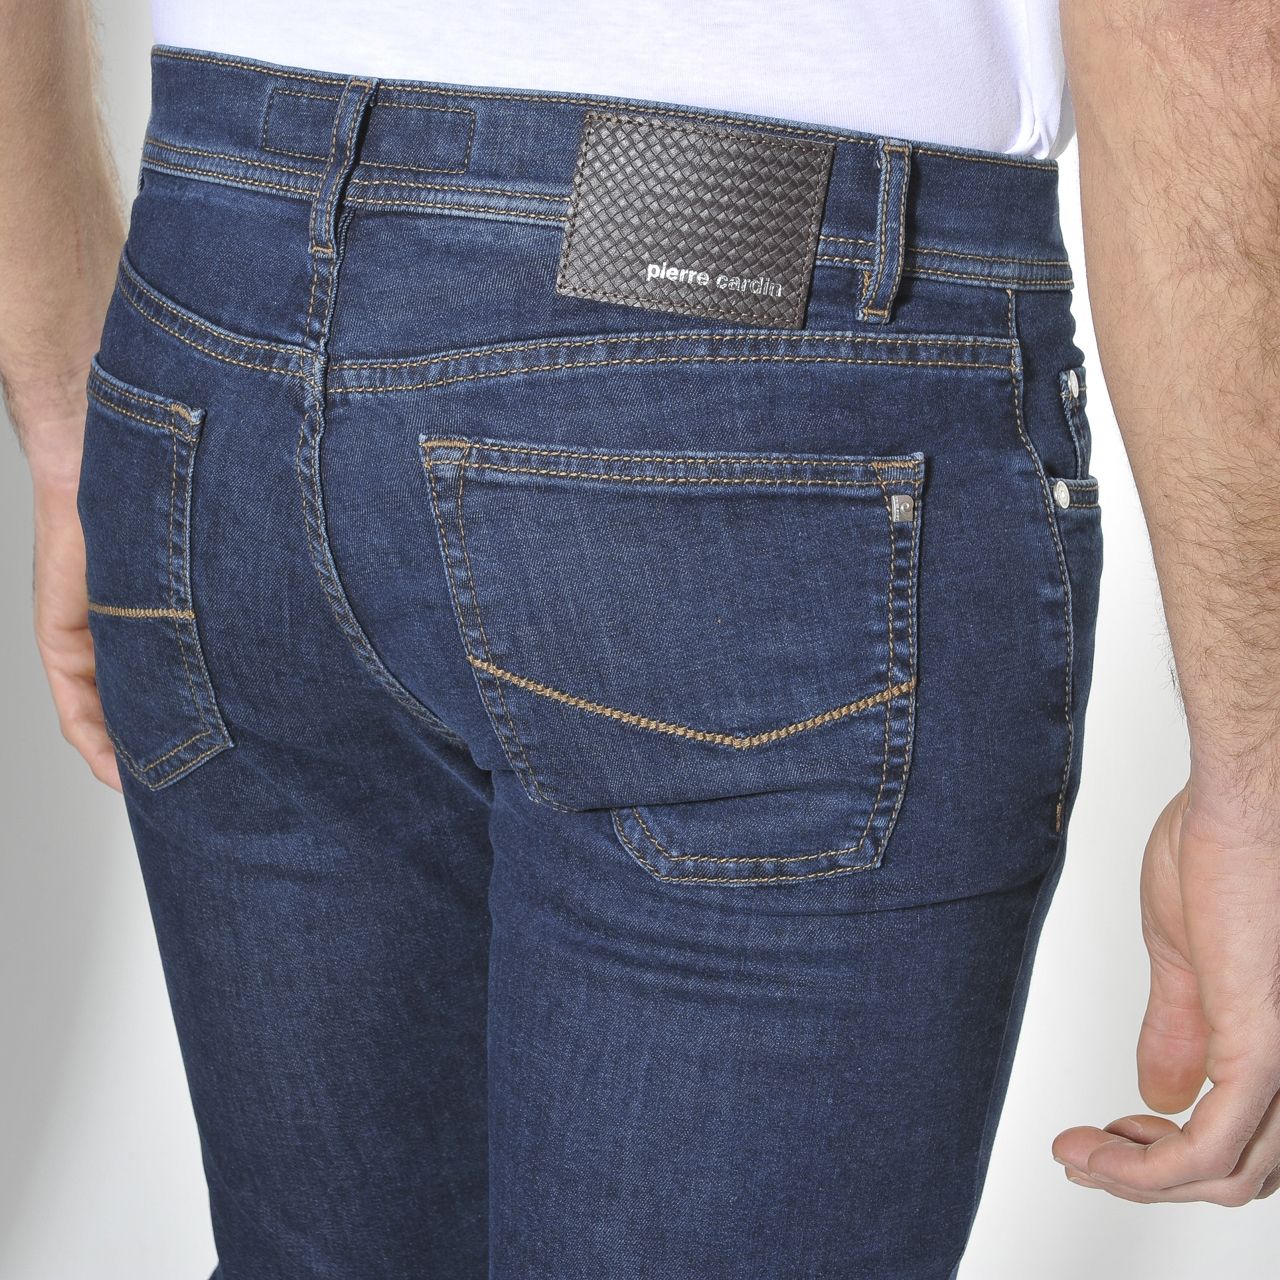 Eentonig Afdrukken Stier Pierre Cardin Lyon Jeans | Shop nu - Only for Men